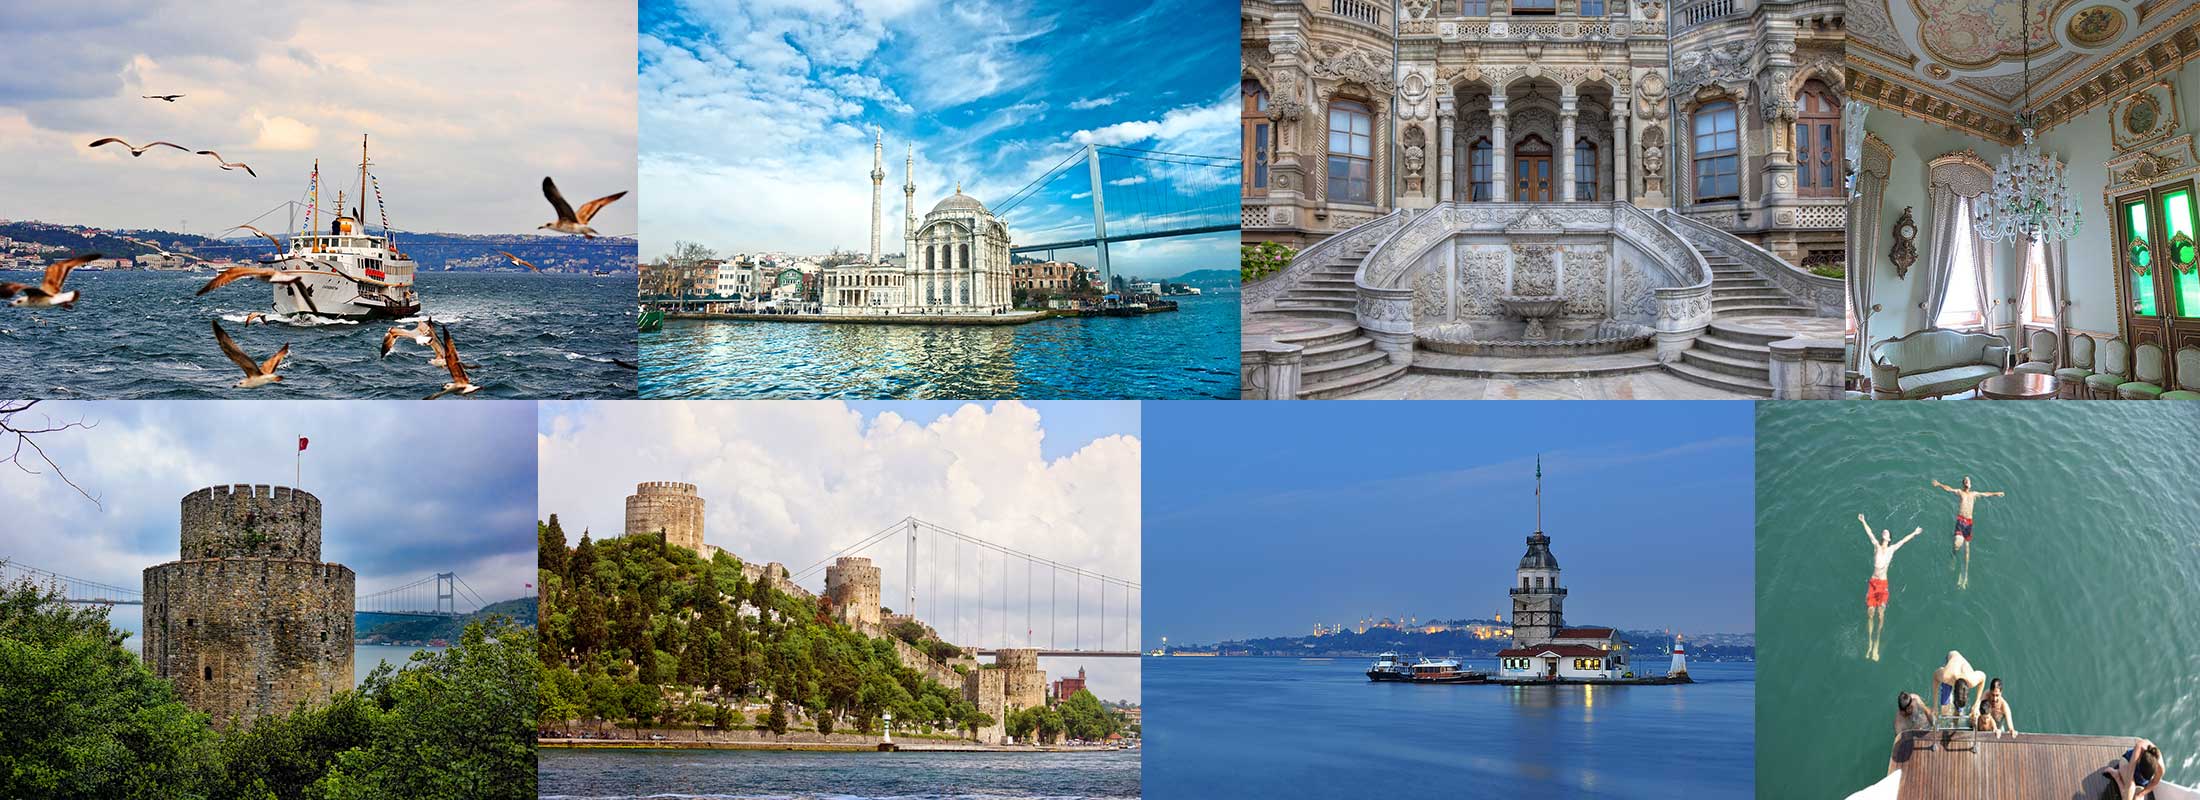 bosphorus-cruise-ortakoy-kucuksu-palace-rumeli-fortress-swimming-istanbul-tour